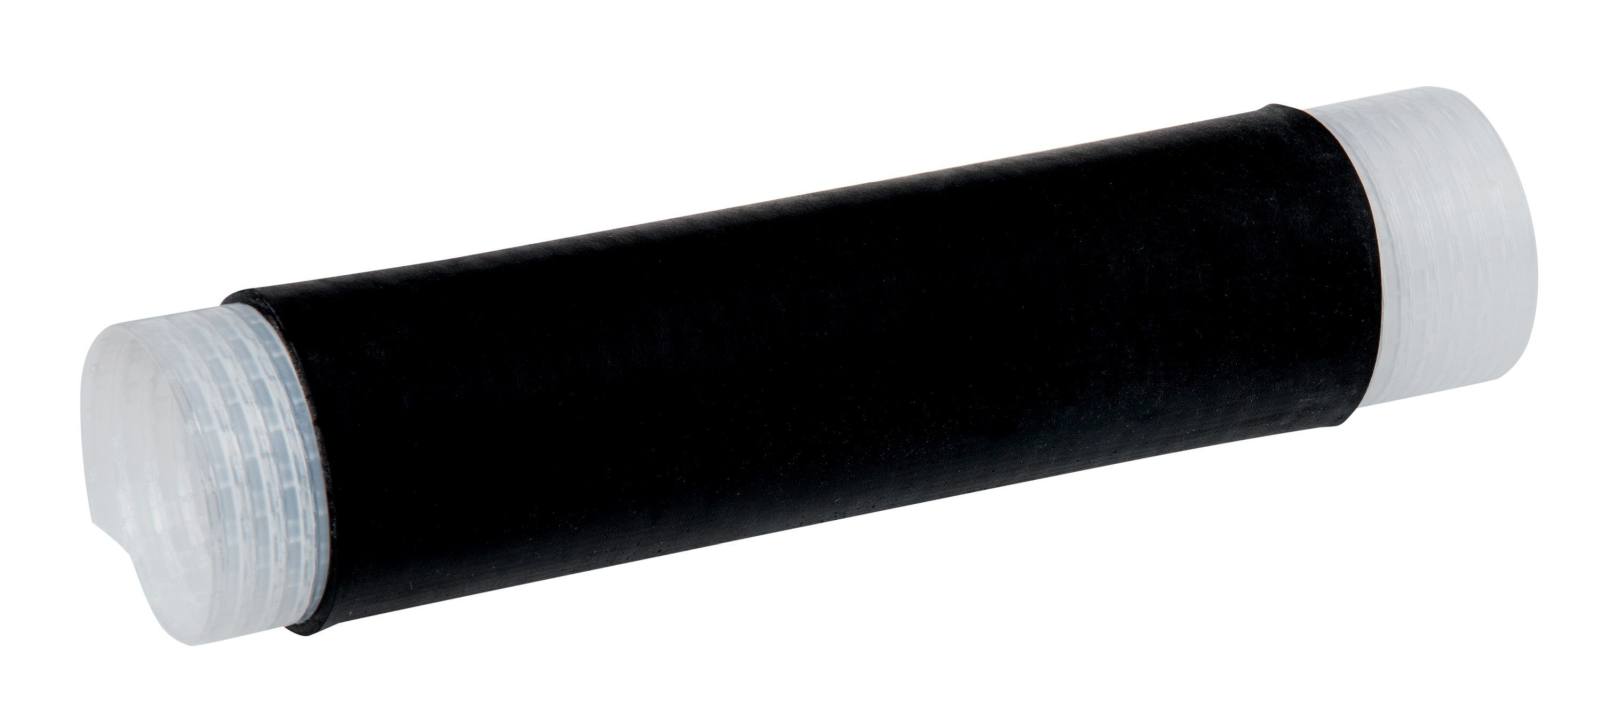  3M PST-kylmäpuristusputki, EPDM, musta, 43,7/12,7 mm, 178 mm